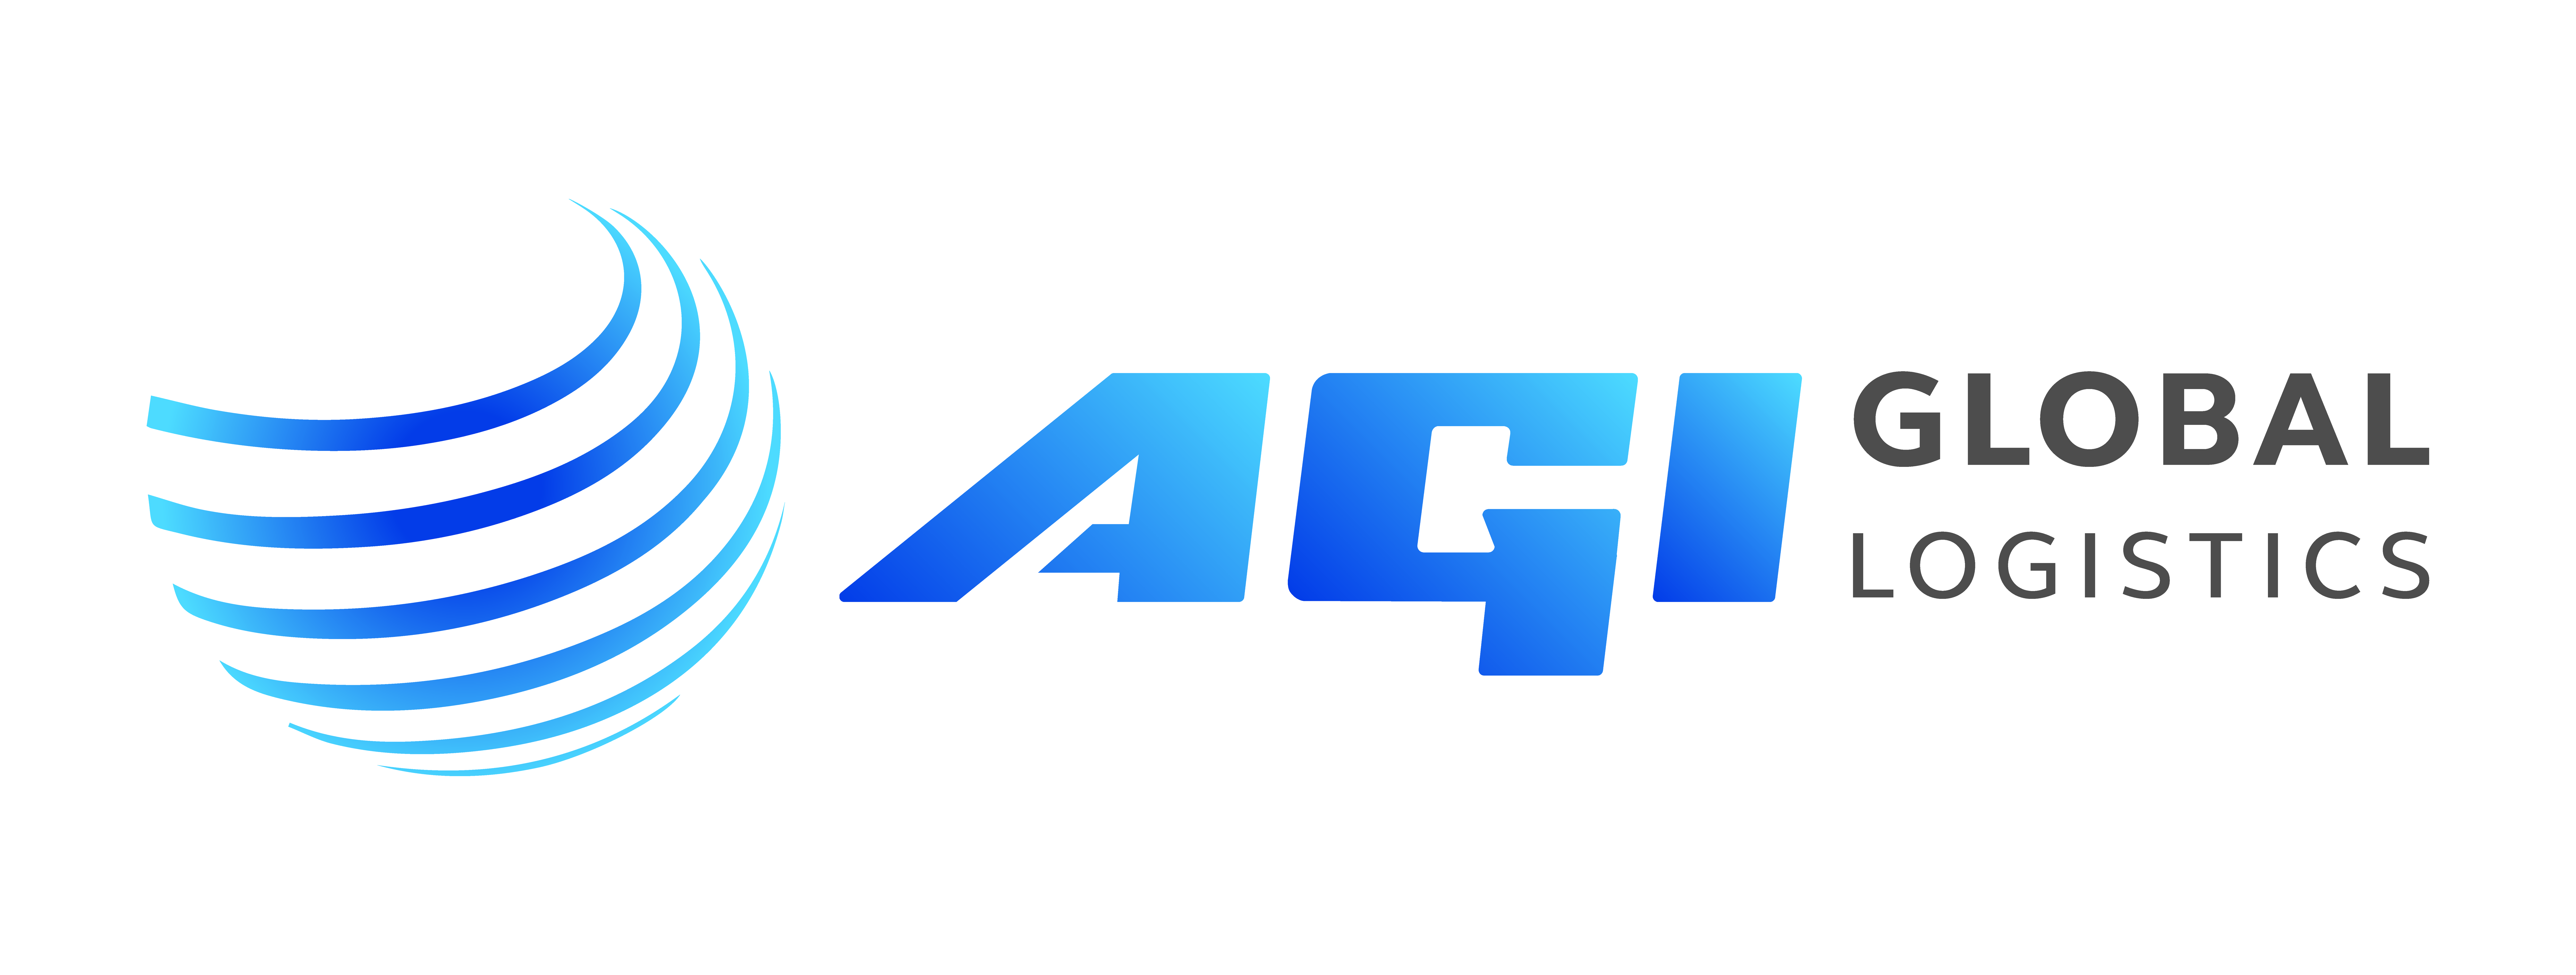 AGI Global Logistics Ltd